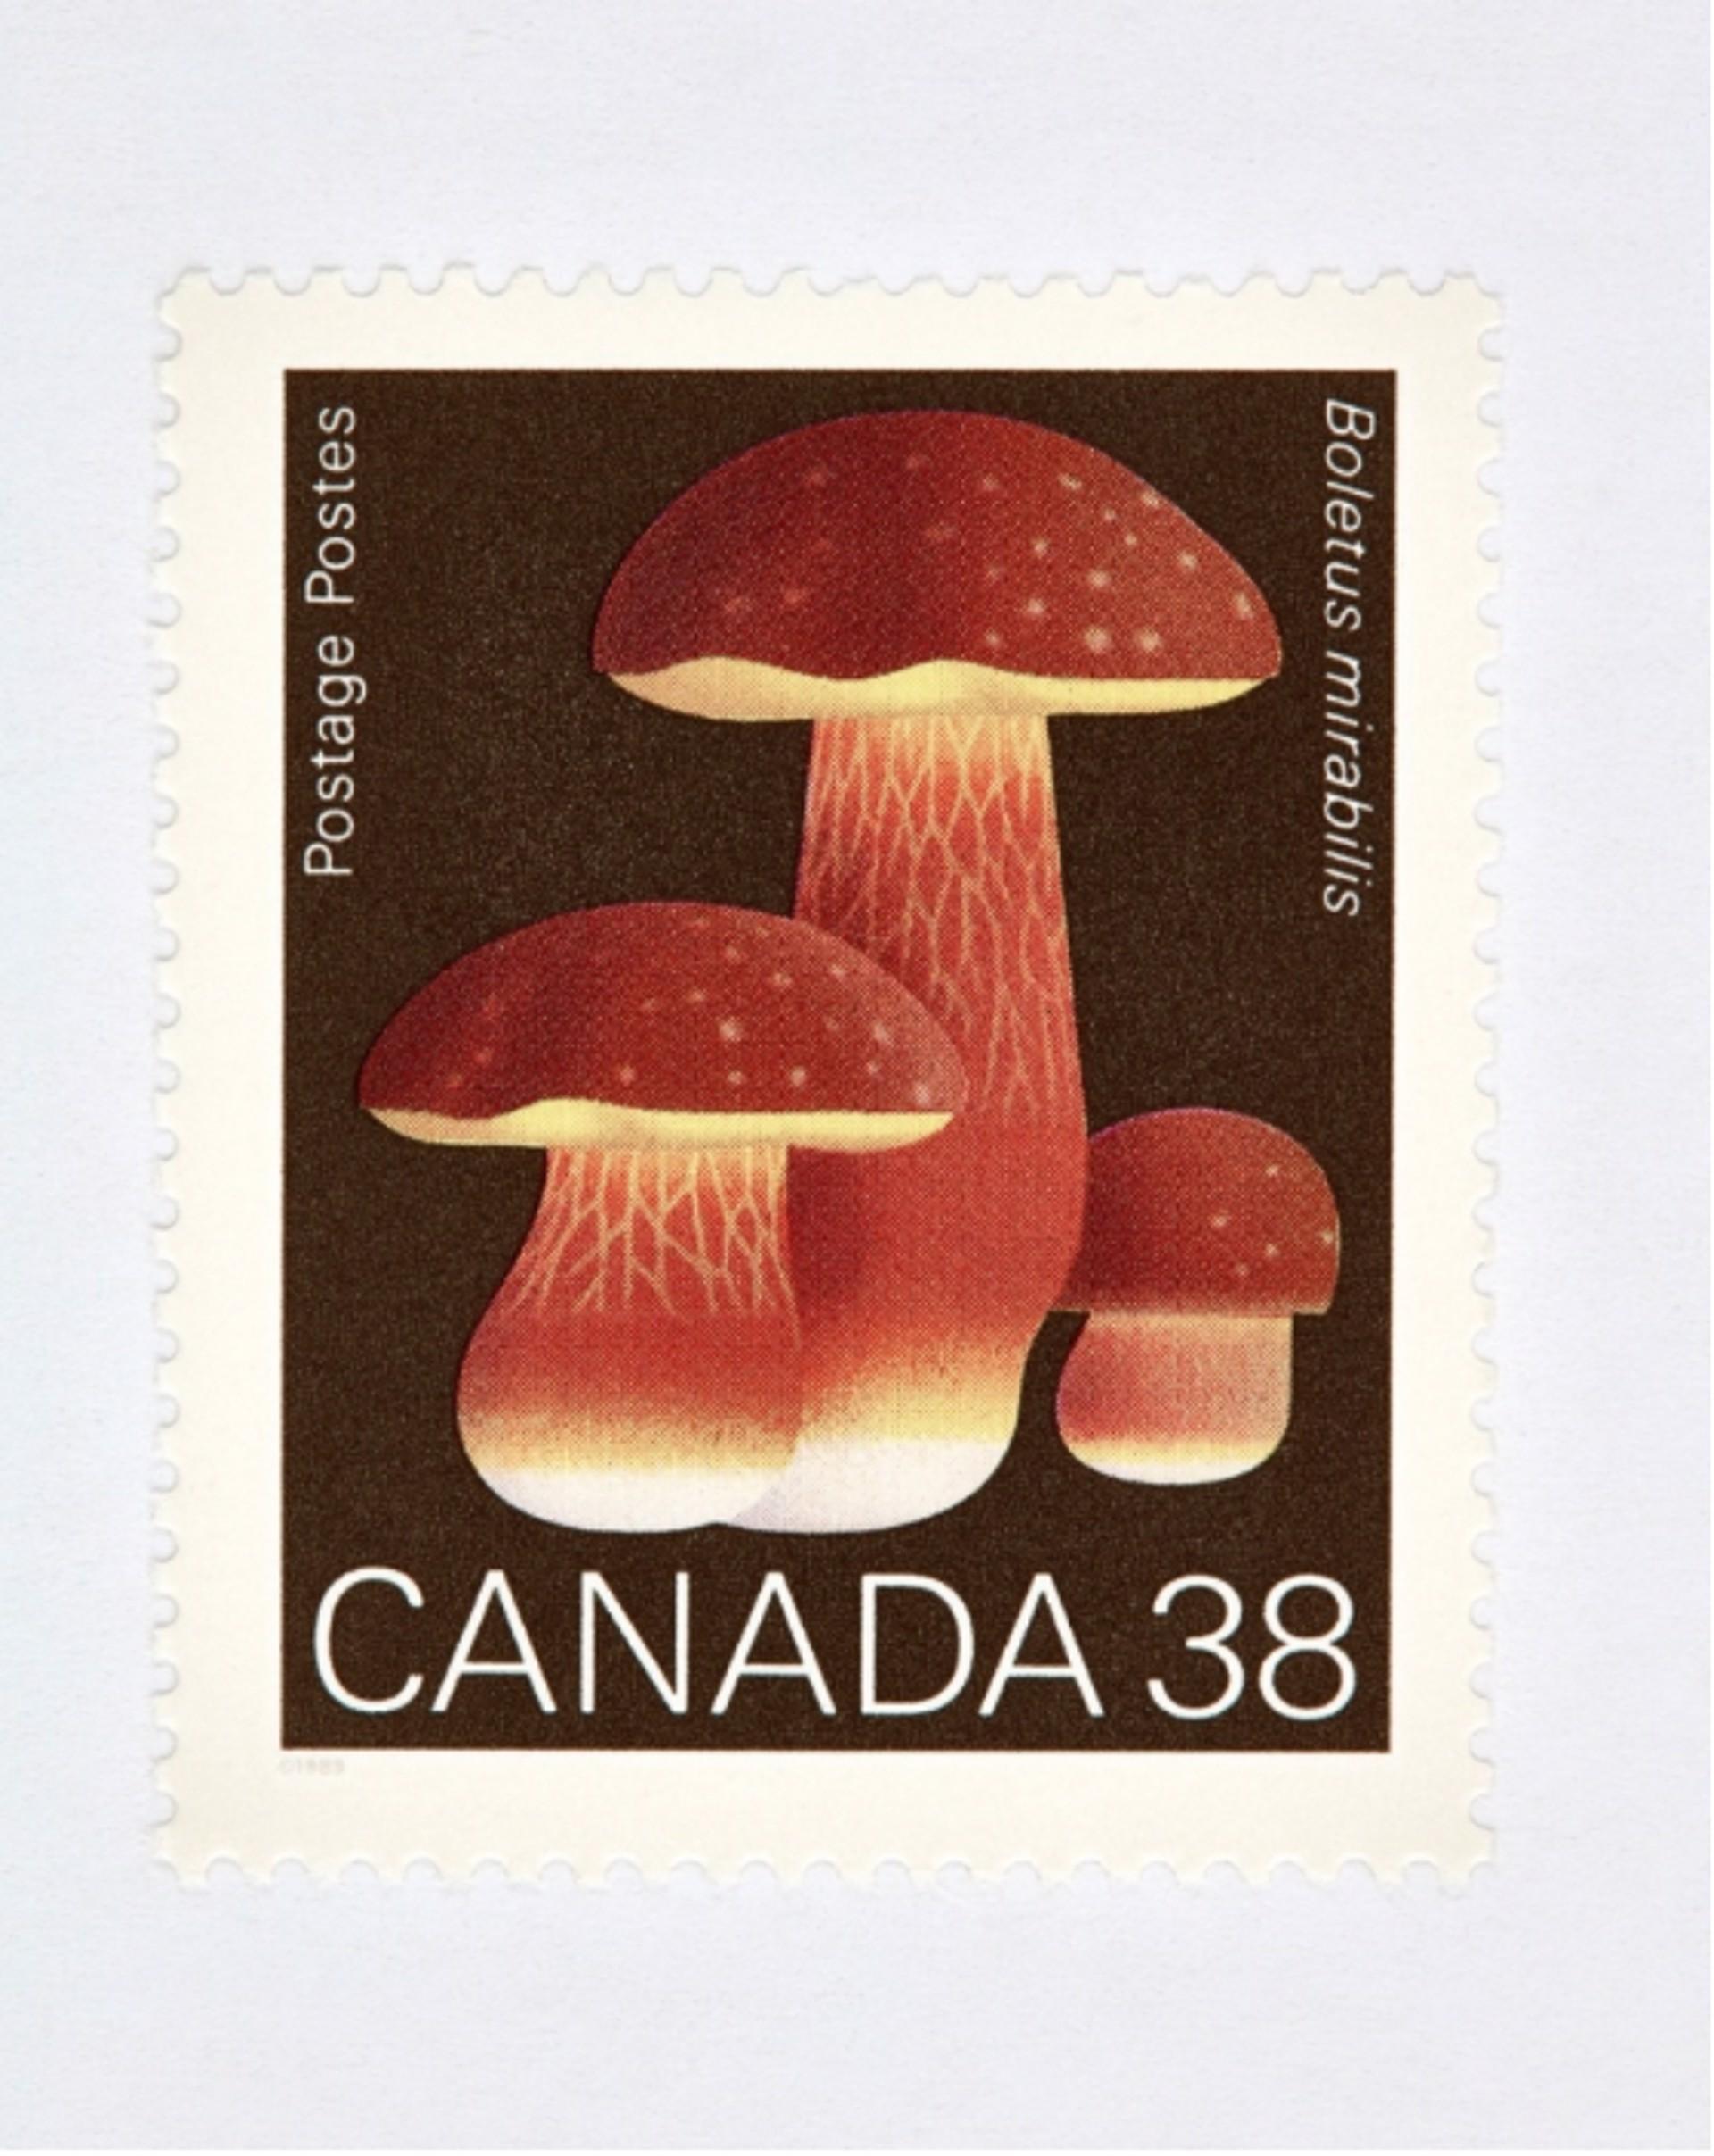 Peter Andrew Lusztyk - Canada 38 Mushroom (Brown), 2021, Printed After